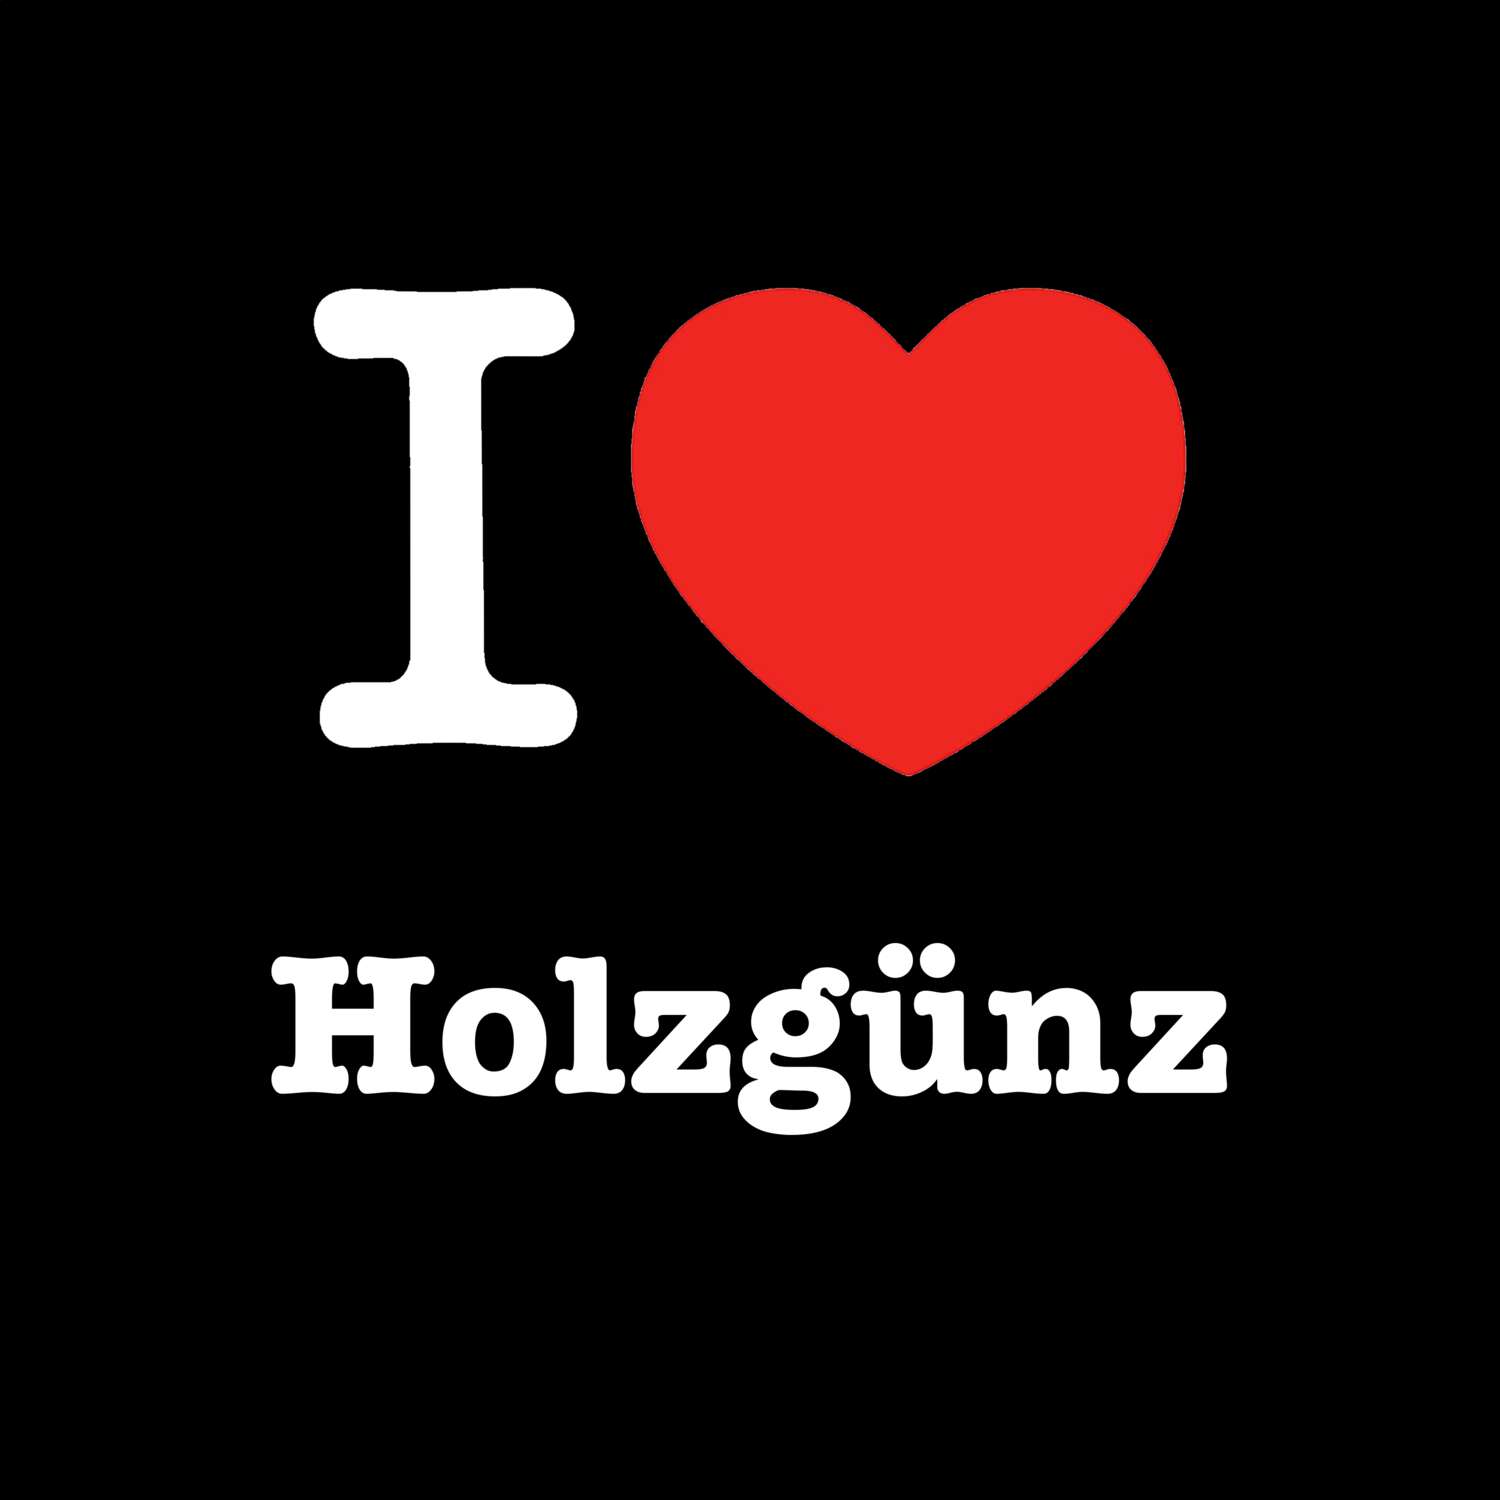 Holzgünz T-Shirt »I love«